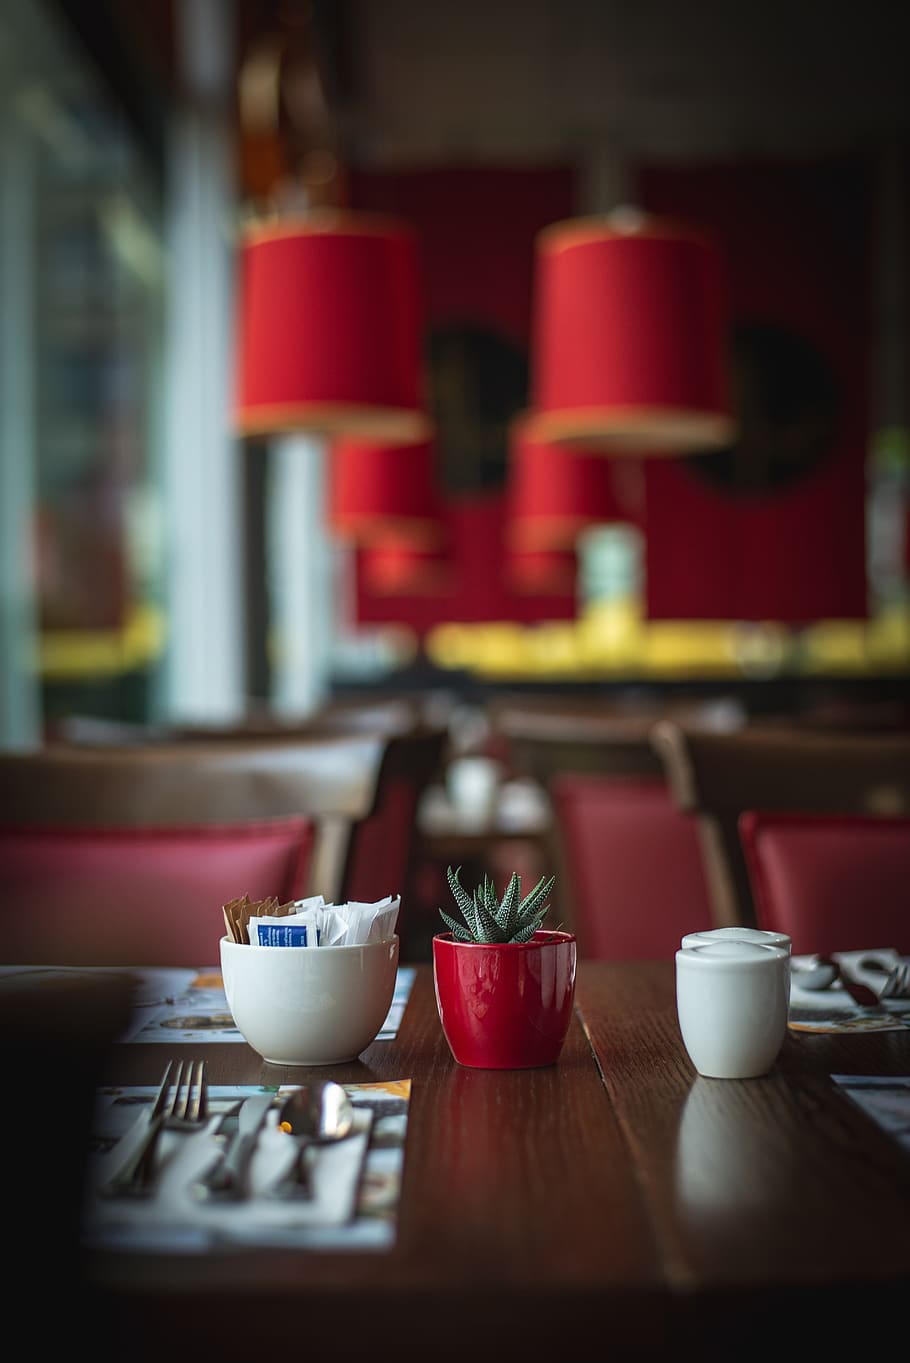 restaurant, still life, table, hotel, red, decoration, wood